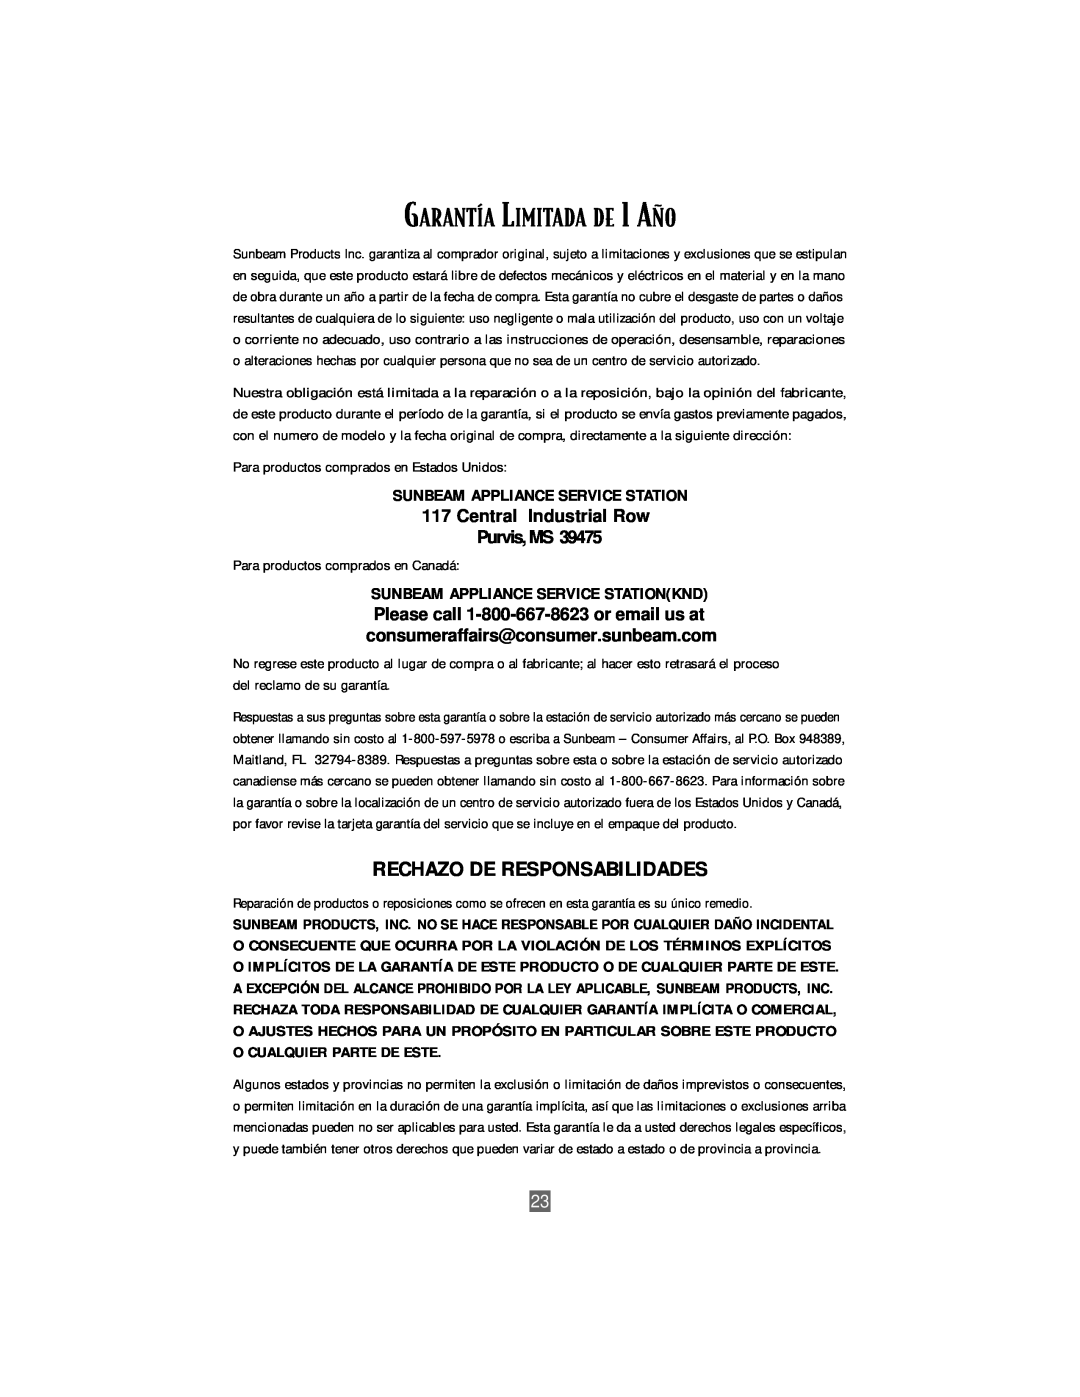 Oster 3207 instruction manual GARANTêA LIMITADA DE 1 A„O, Rechazo De Responsabilidades, Central Industrial Row Purvis,MS 